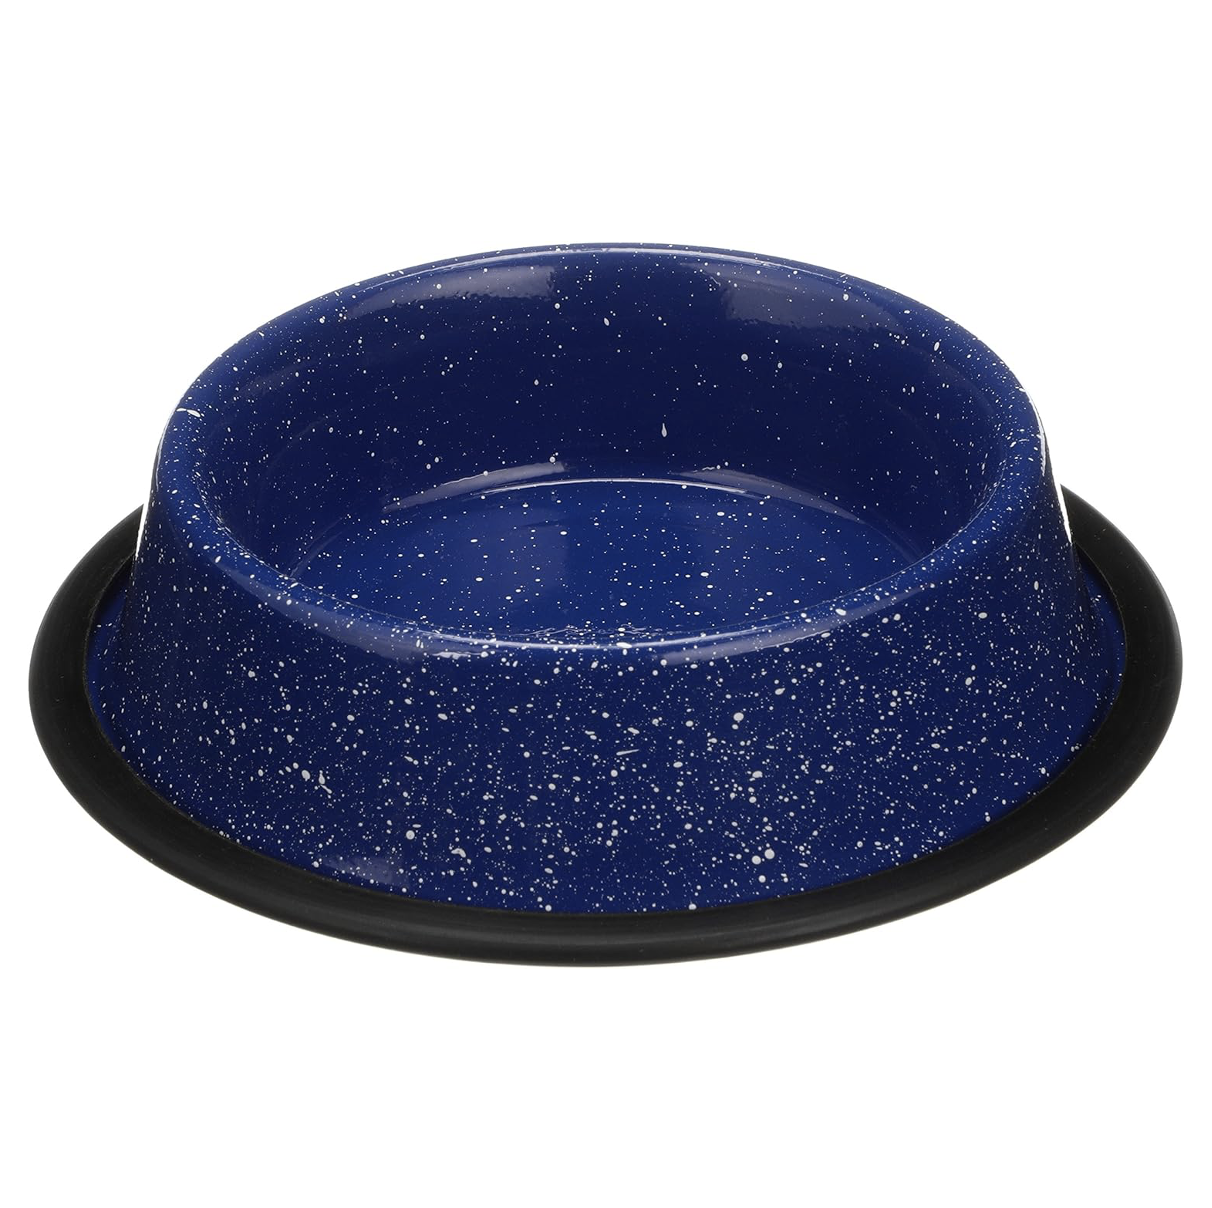 blue dog bowl